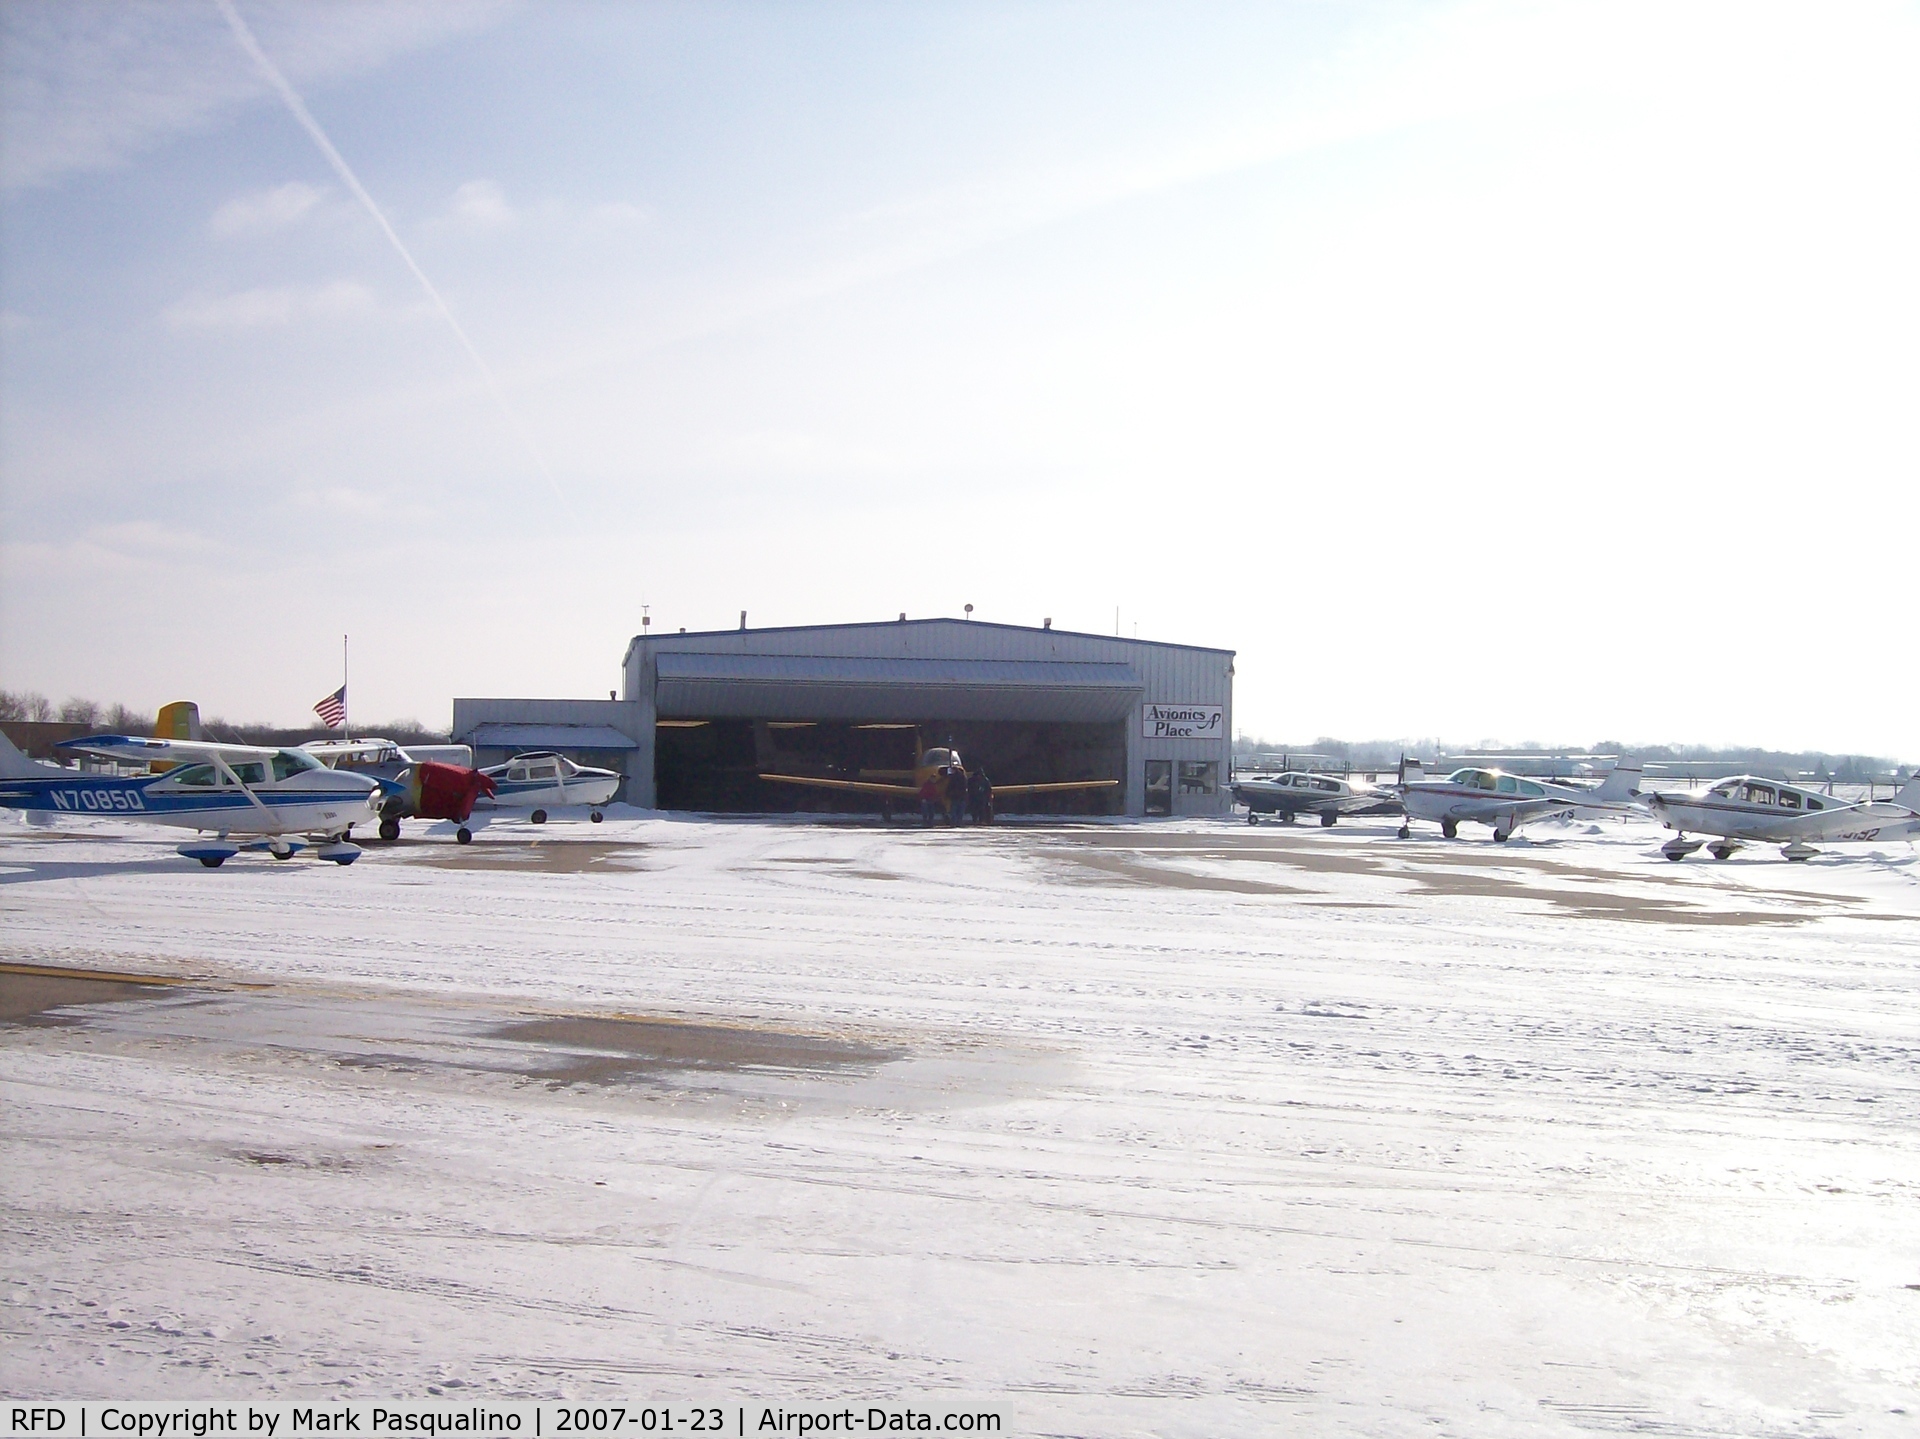 Chicago/rockford International Airport (RFD) - Avionics Place ramp